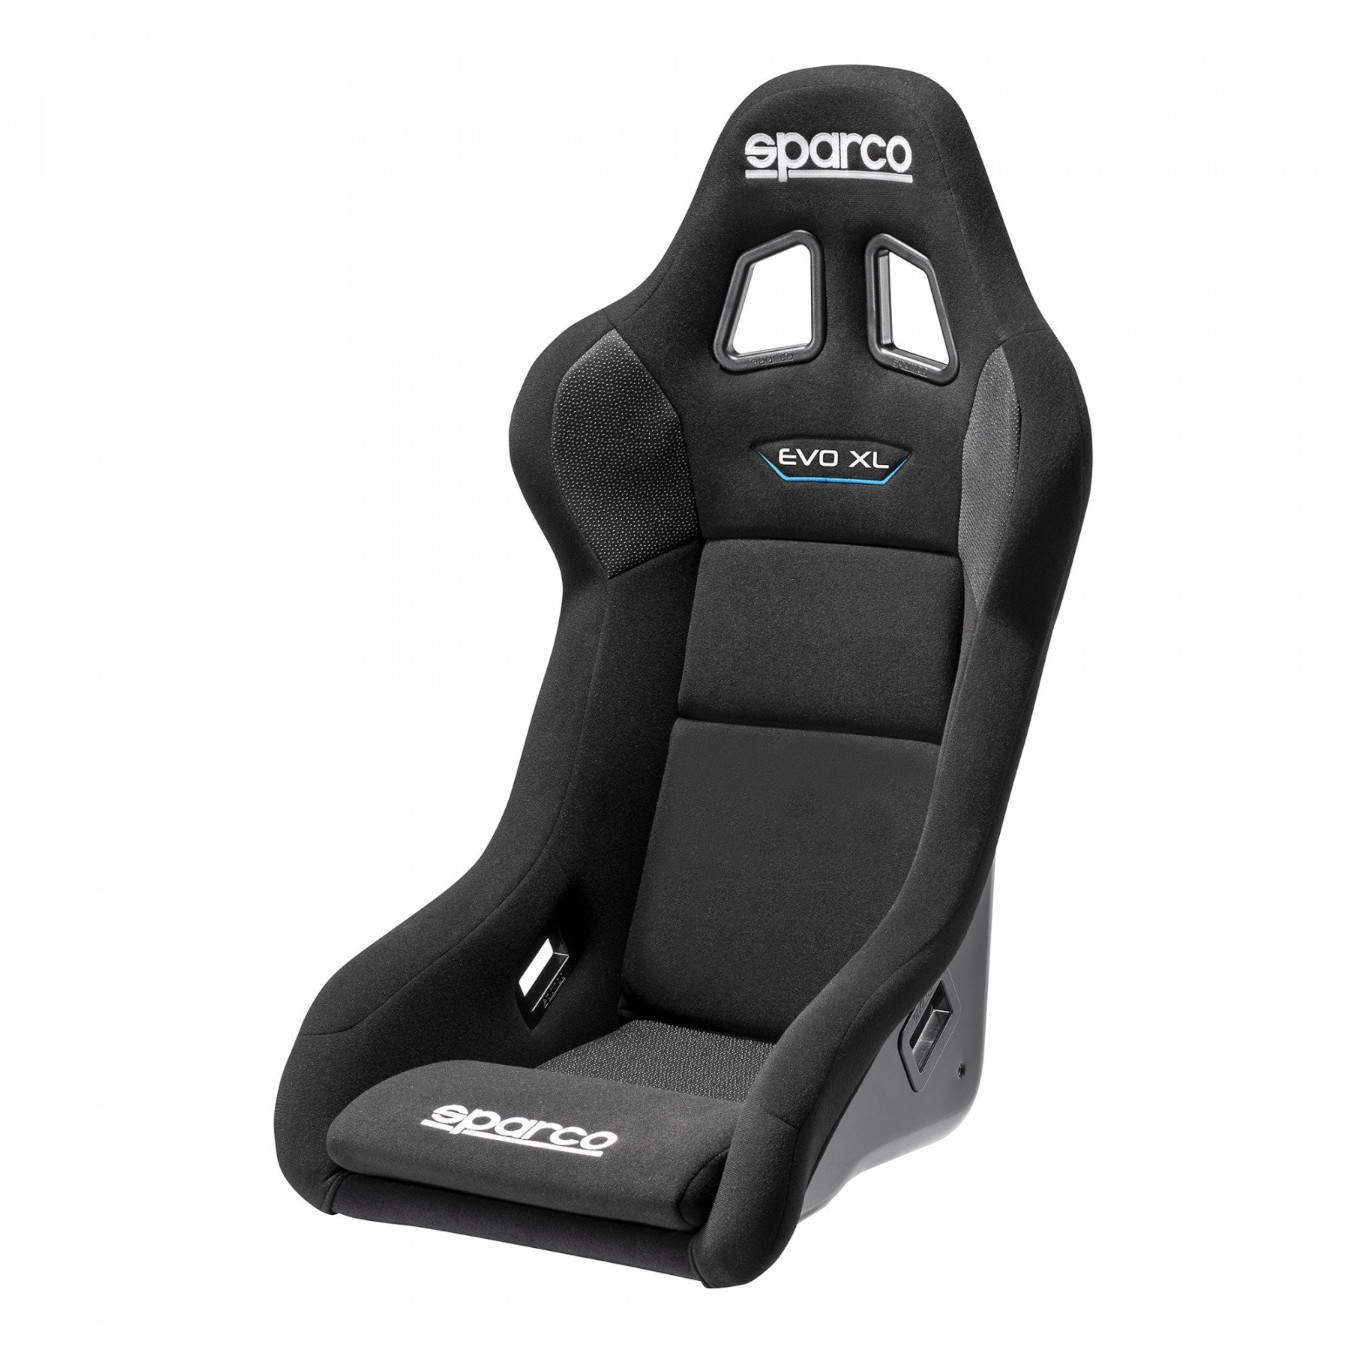 https://www.oreca-store.com/media/catalog/product/s/p/sparco-evo-xl-qrt-race-seat-0_1.jpg